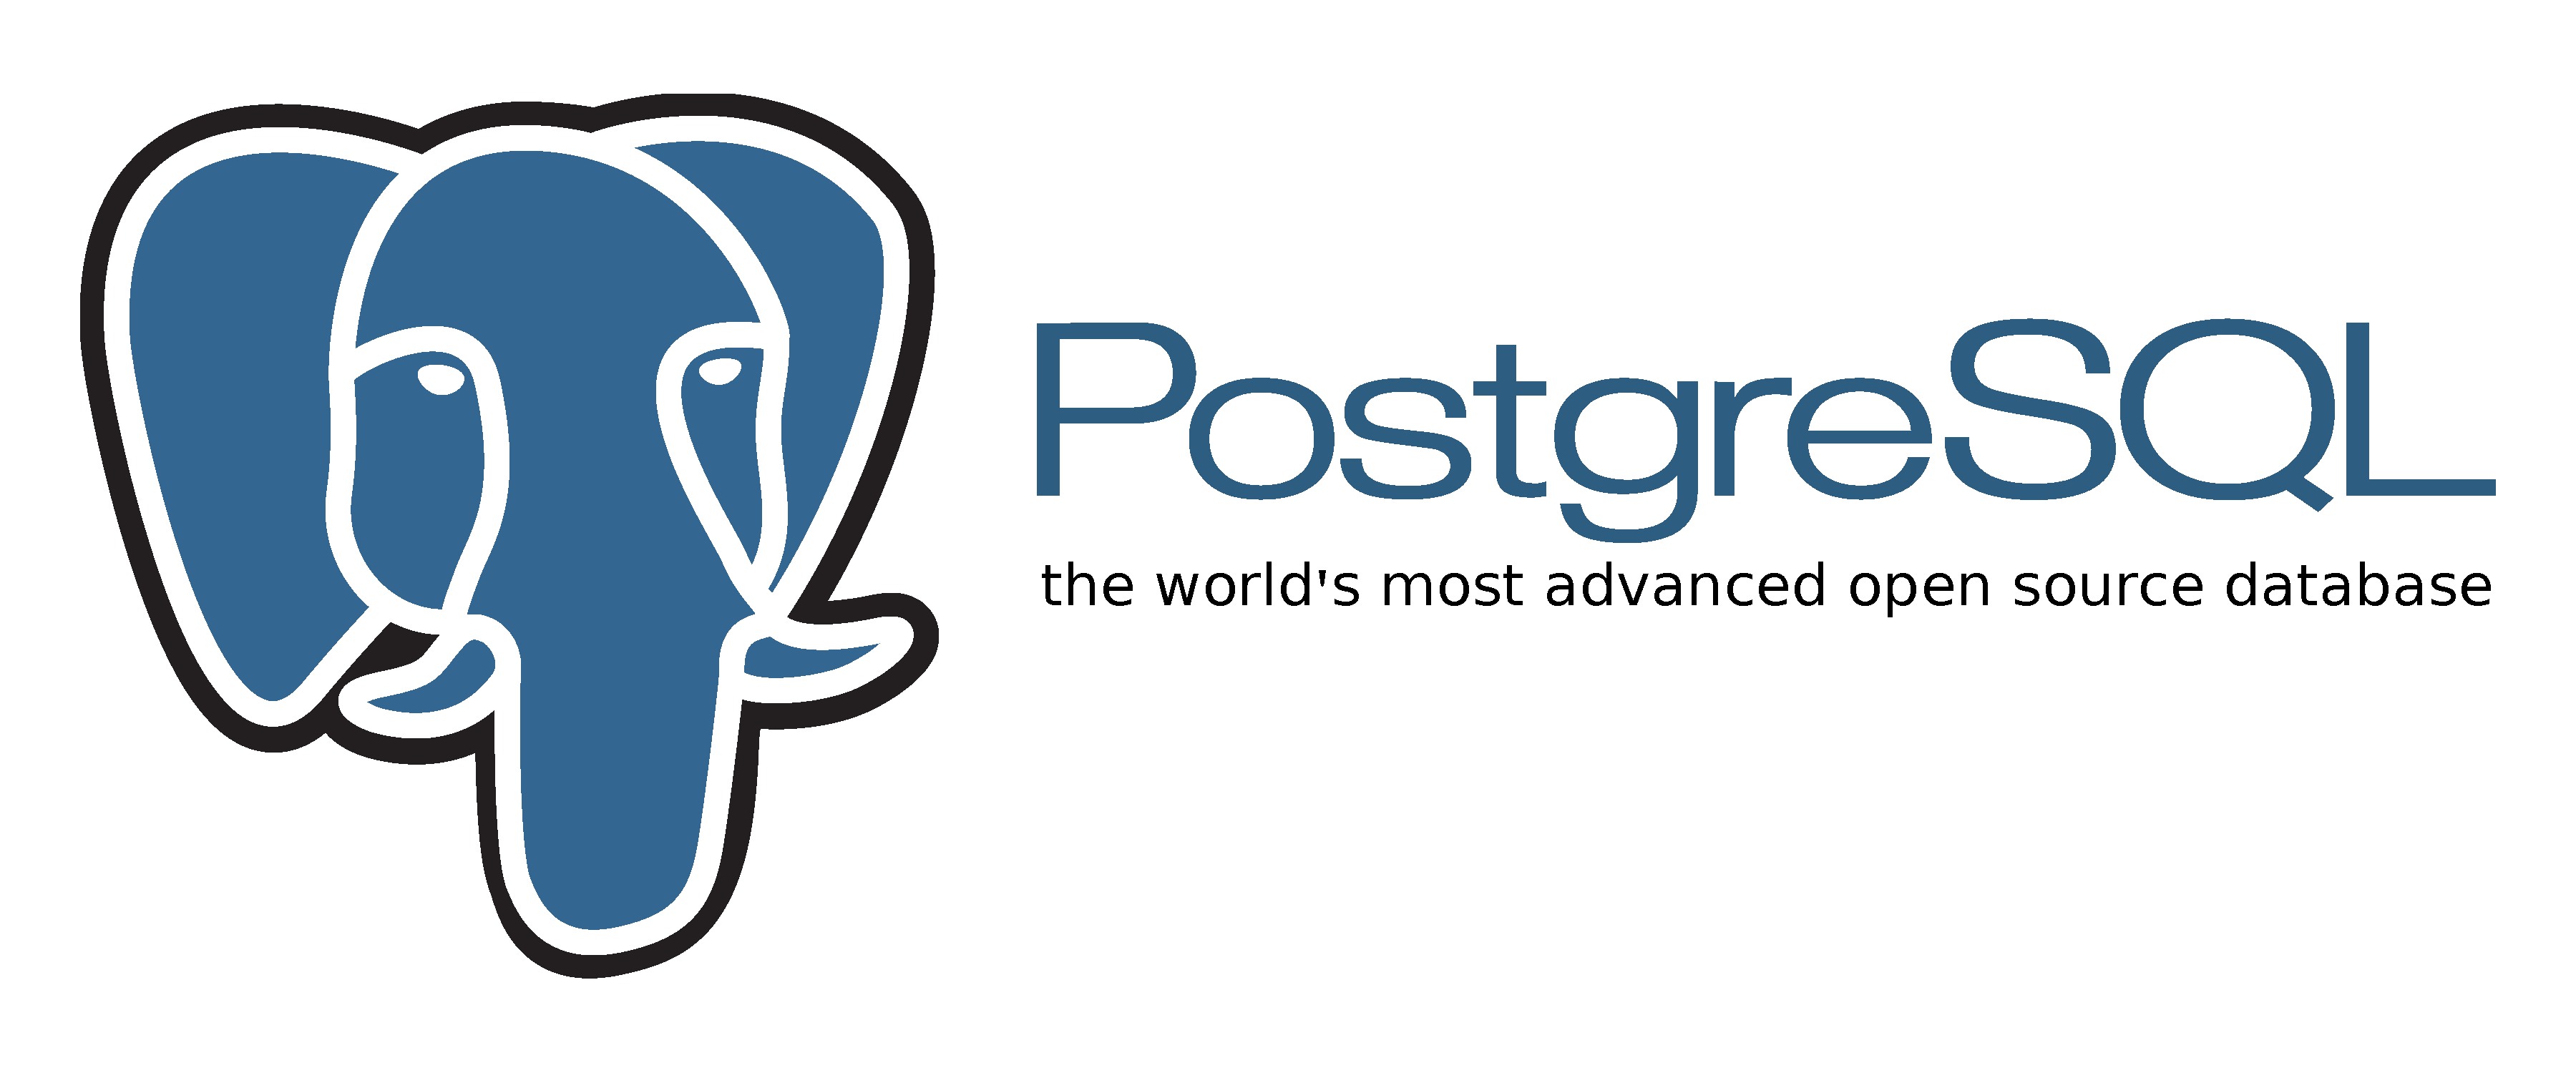 Postgresql int. POSTGRESQL. POSTGRESQL картинки. POSTGRESQL logo. POSTGRESQL логотип с прозрачным фоном.